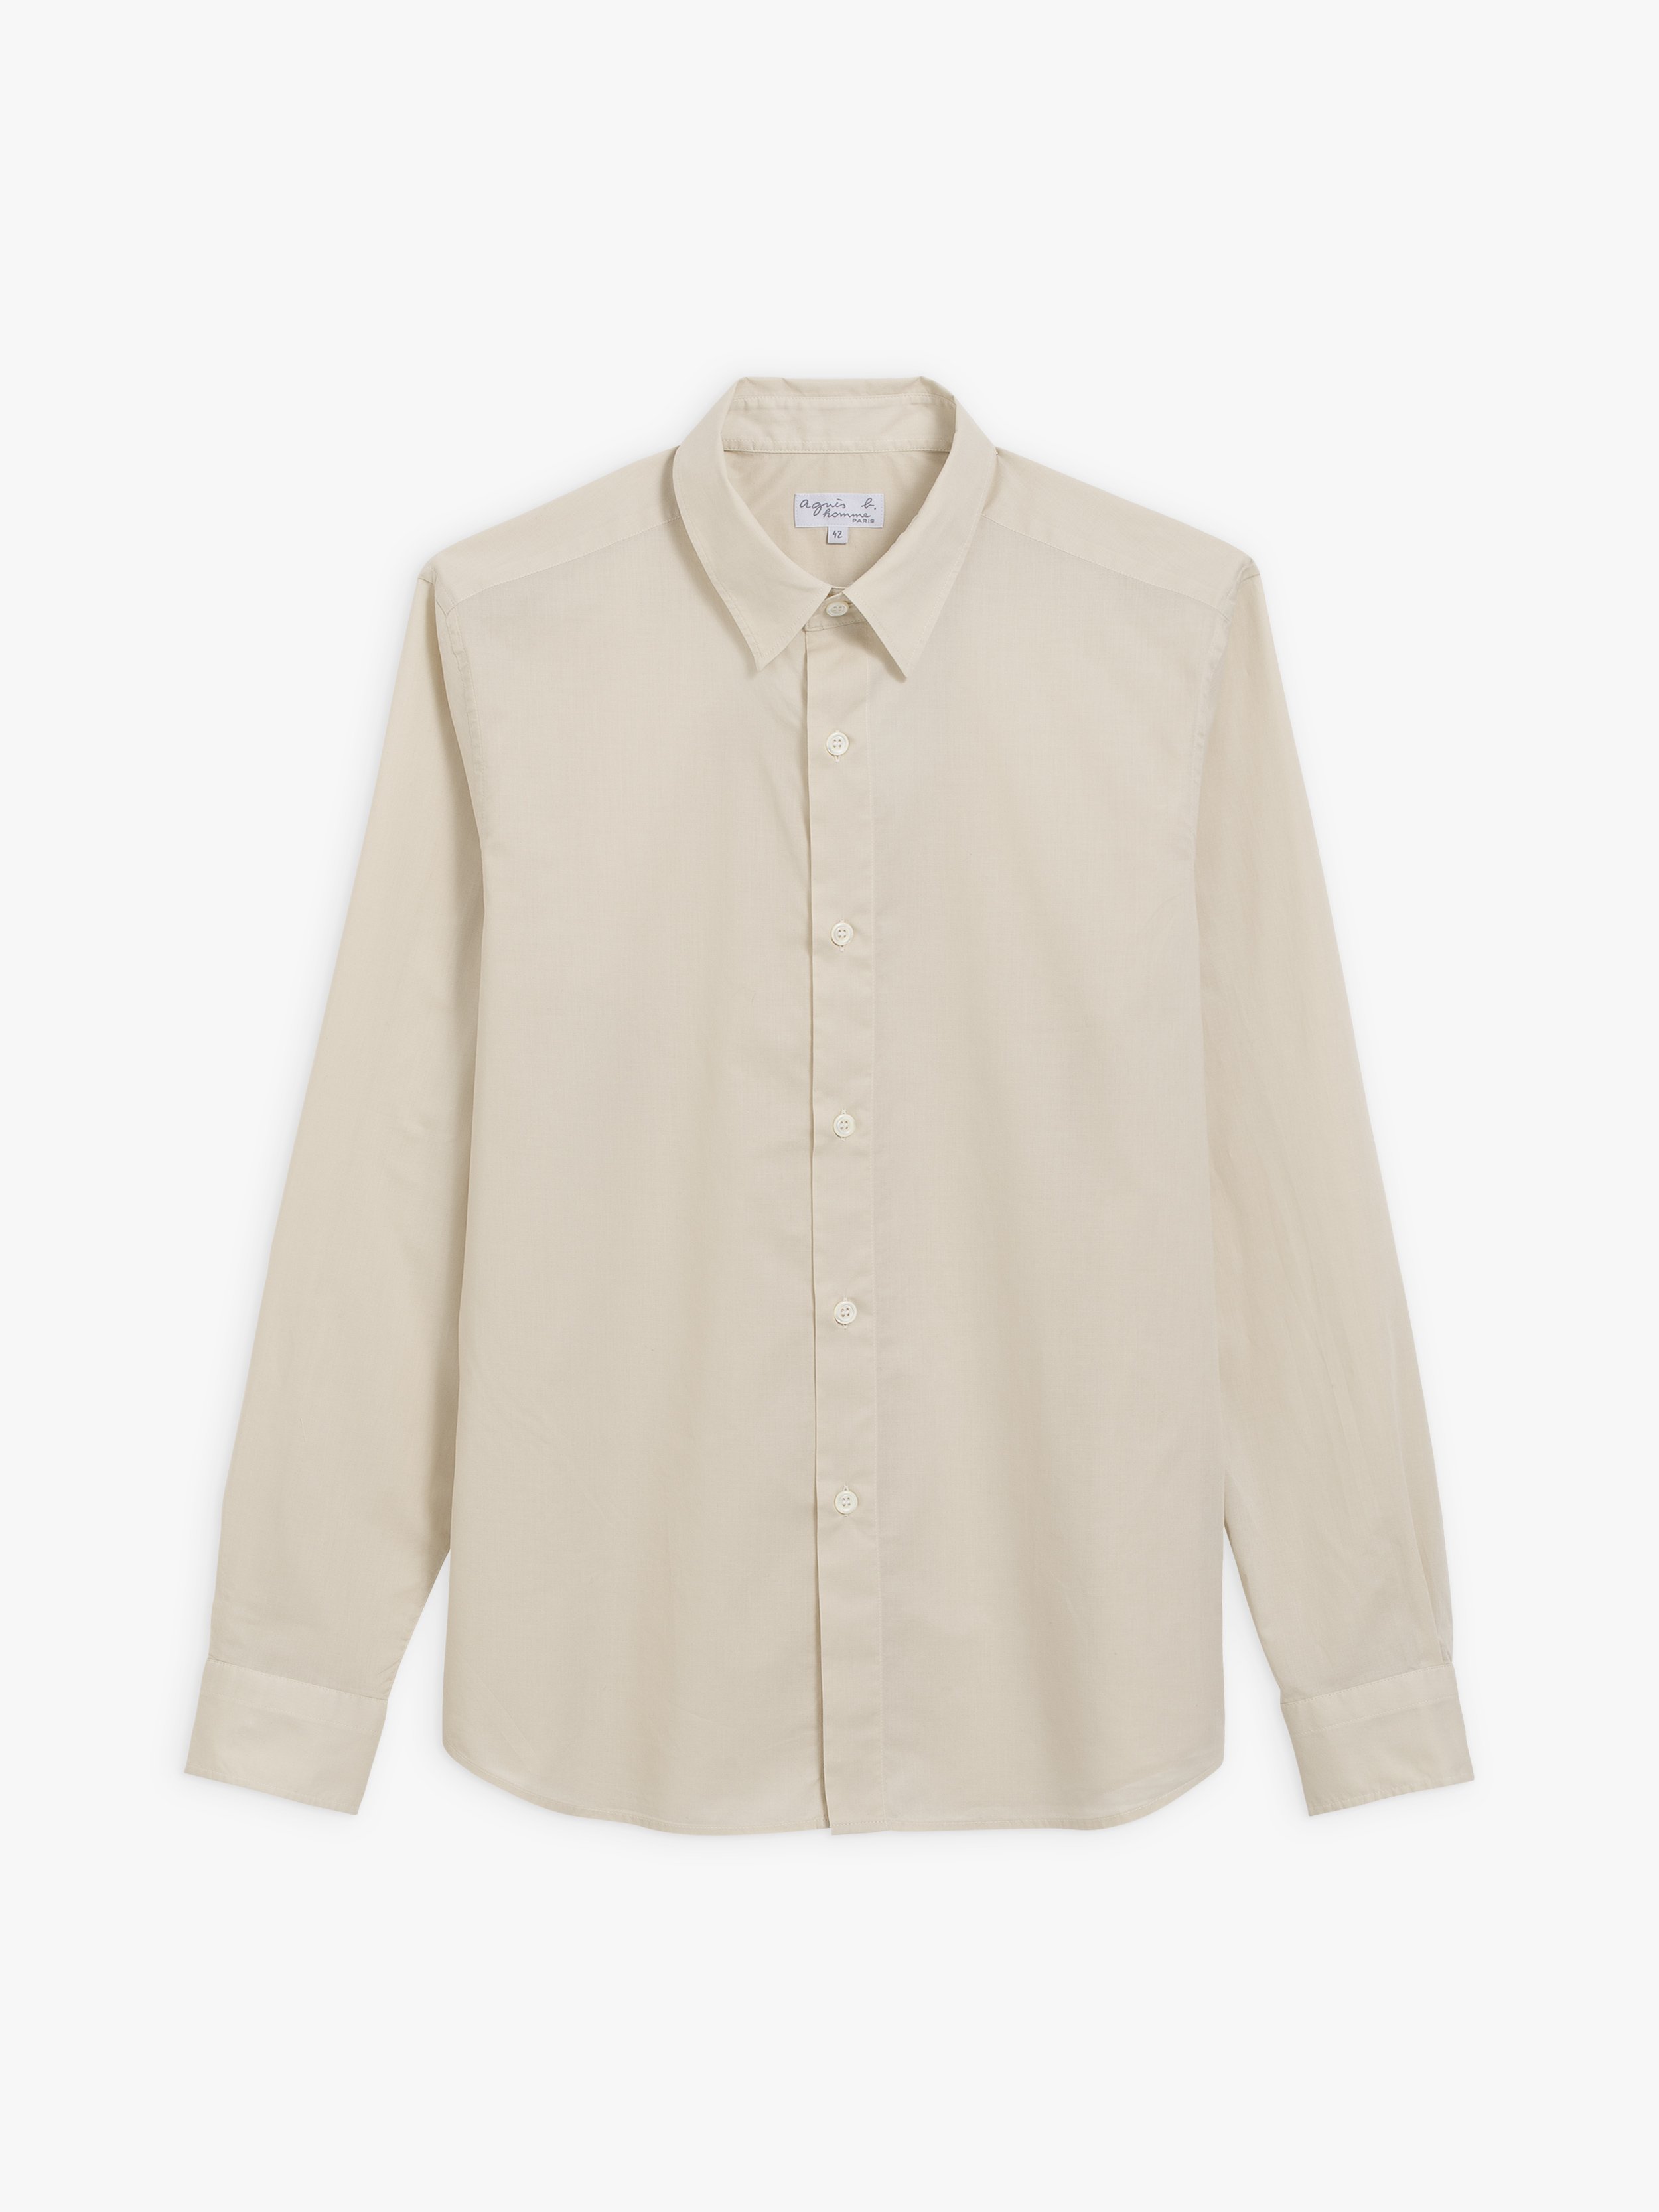 beige cotton percale Thomas shirt | agnès b.